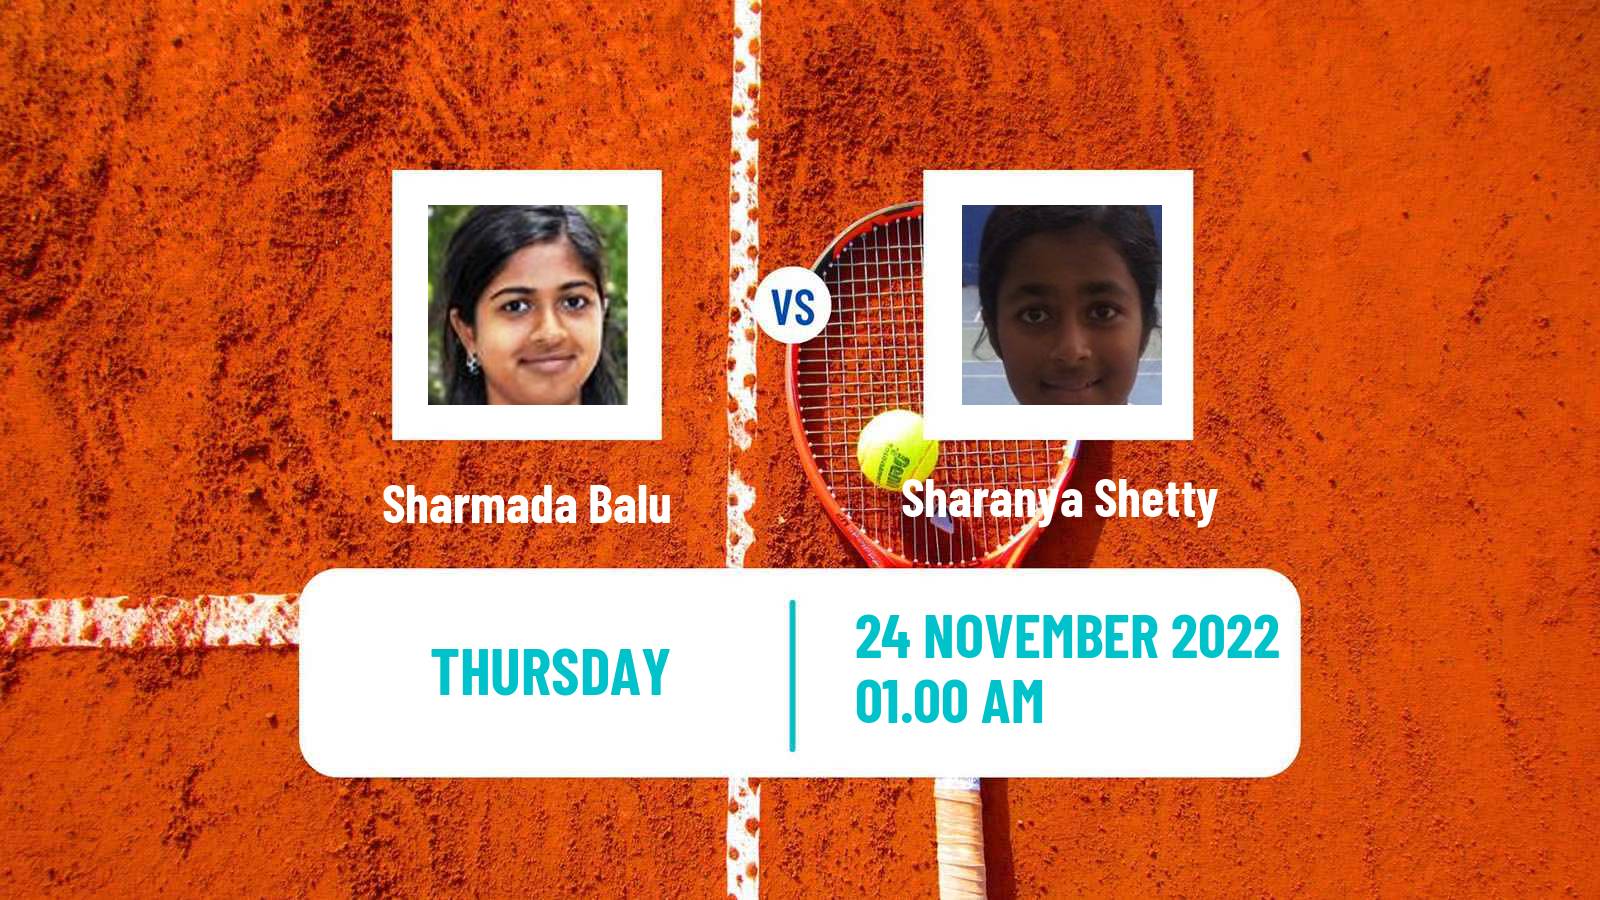 Tennis ITF Tournaments Sharmada Balu - Sharanya Shetty